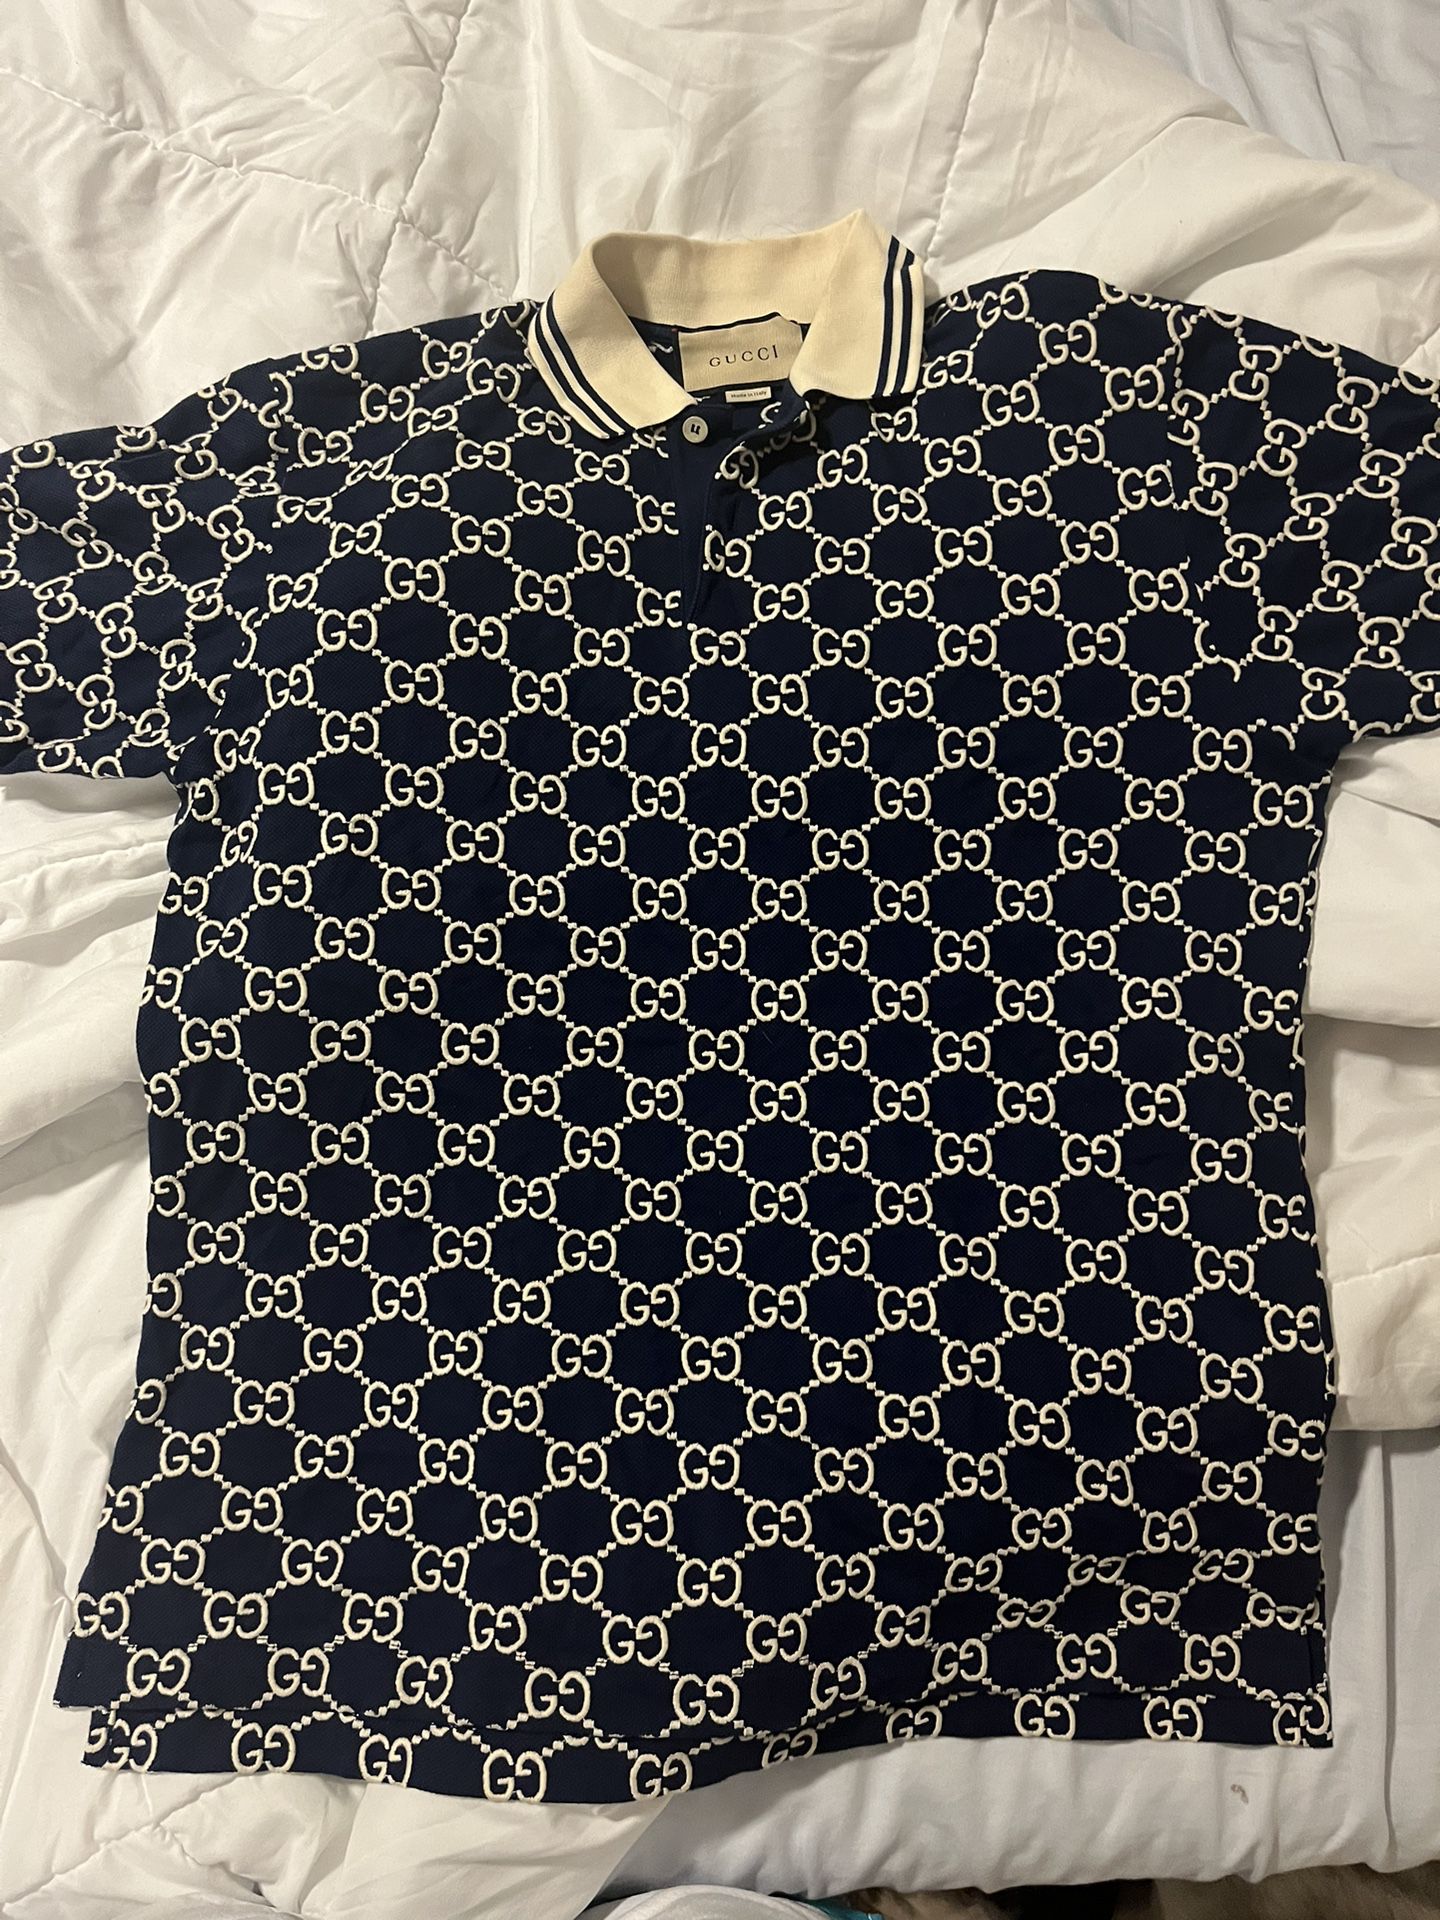 Gucci Polo Shirt 